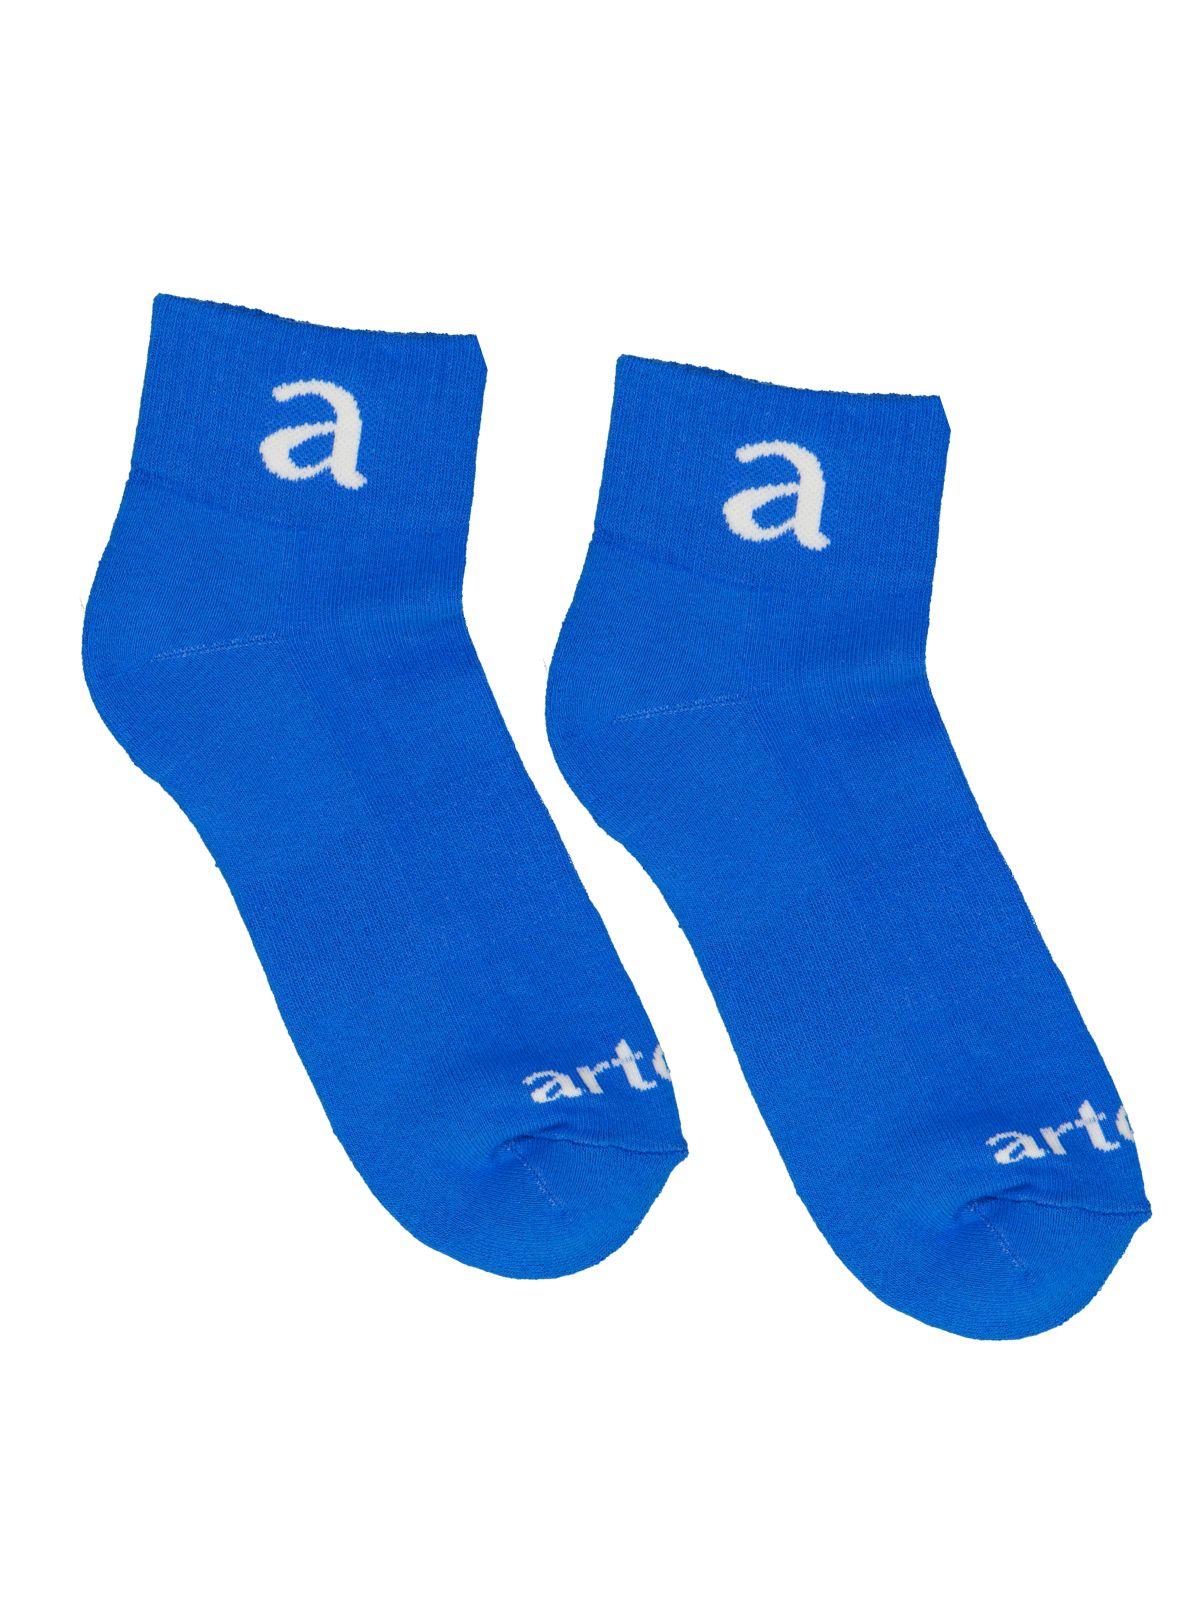 Royal Ankle Socks